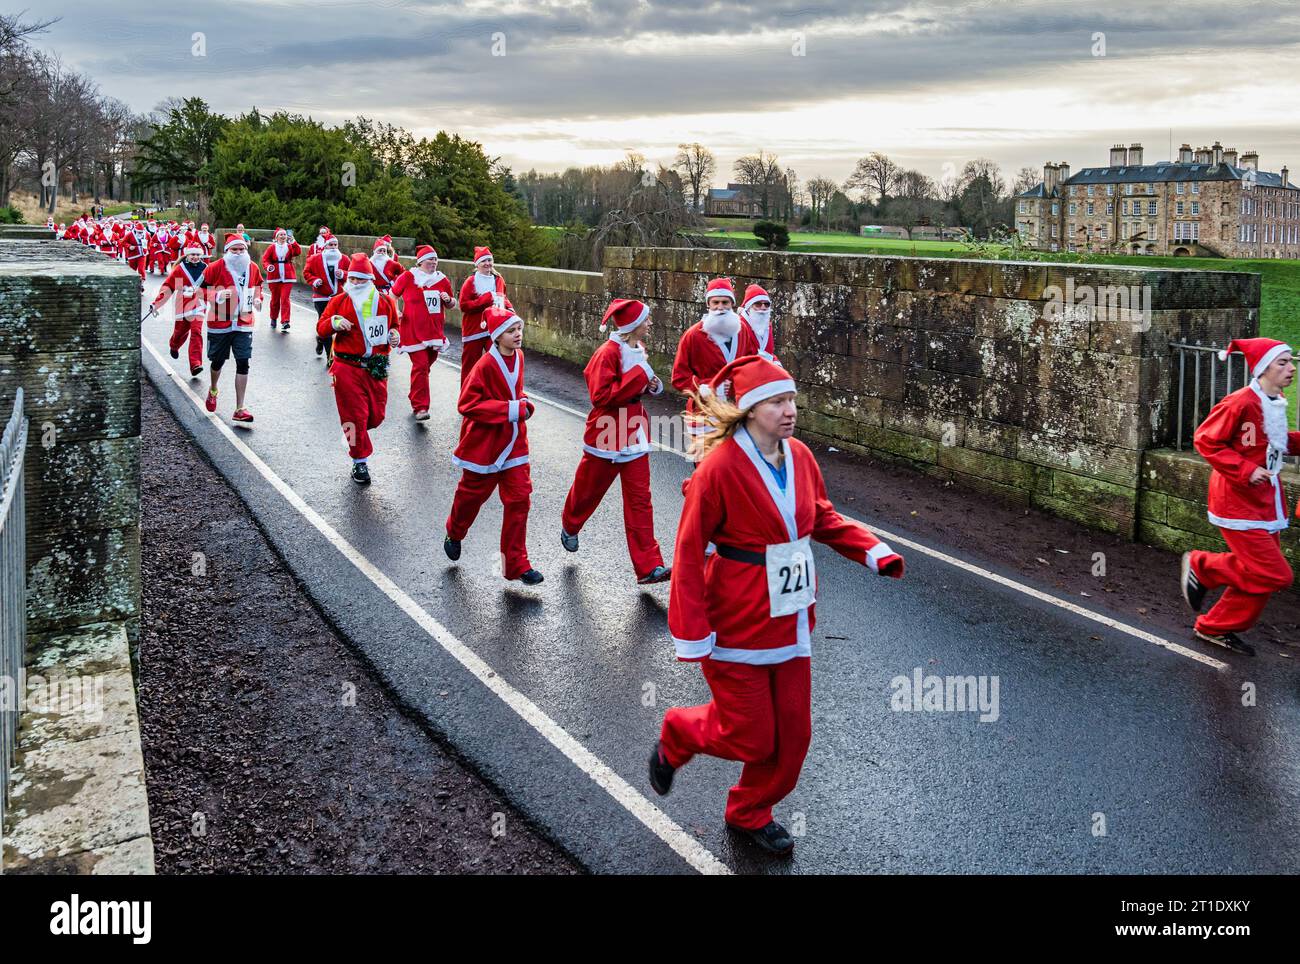 Participants in Santa Run, Dalkeith Country Park, Midlothian, Scotland, UK Stock Photo